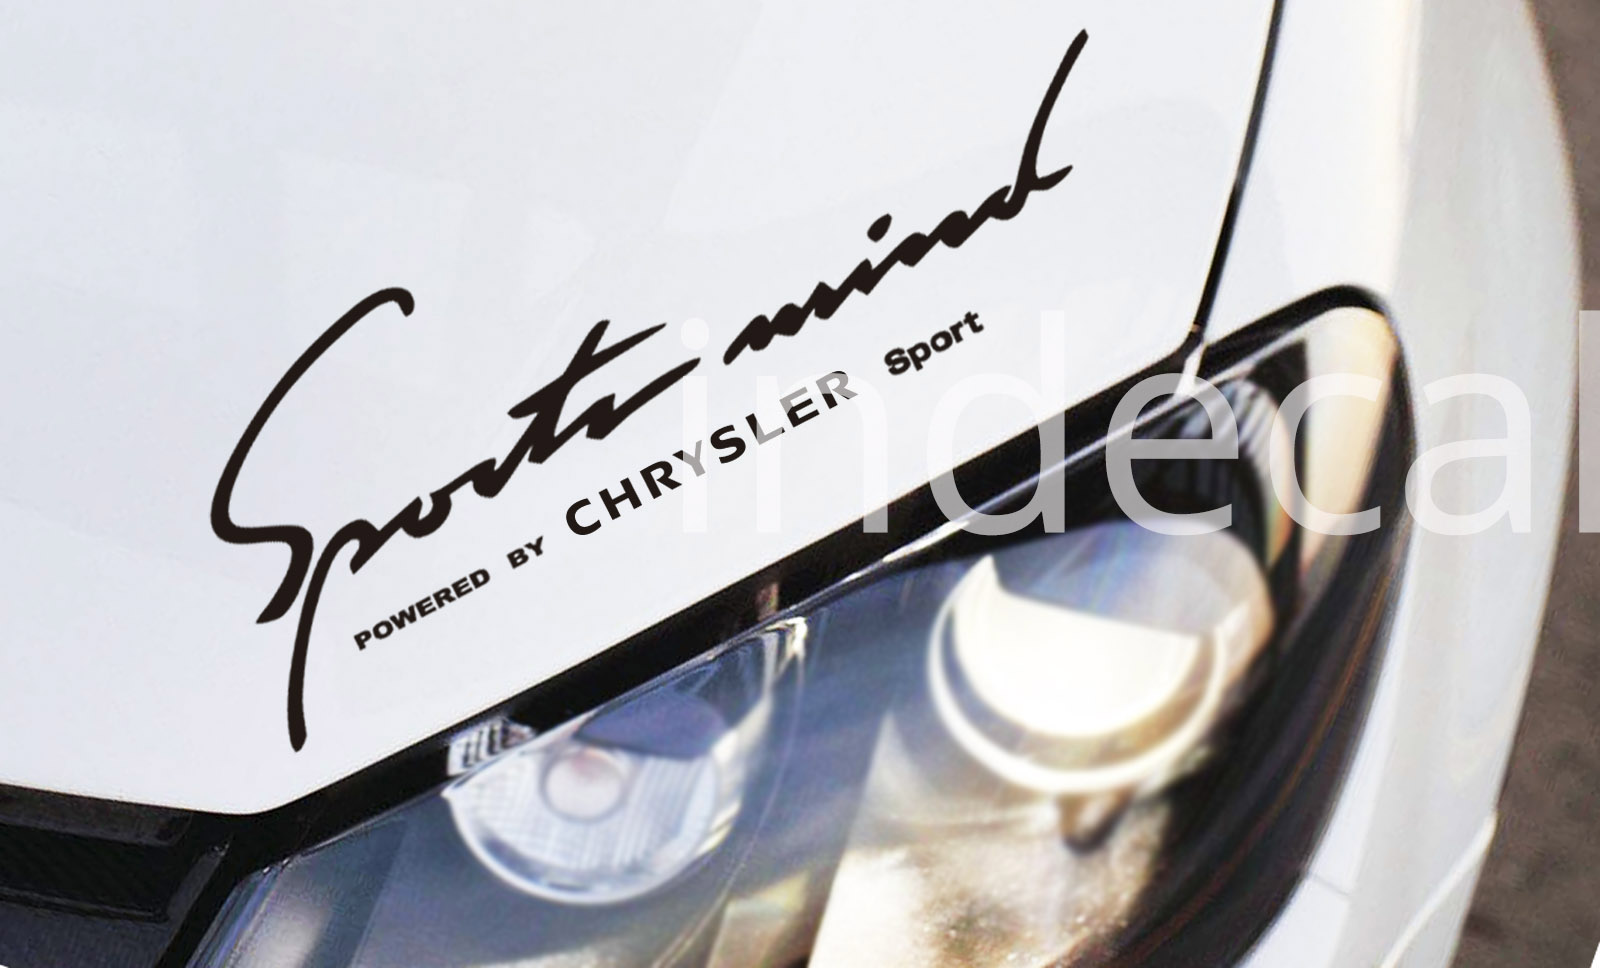 1 x Chrysler Sports Mind Sticker - Black